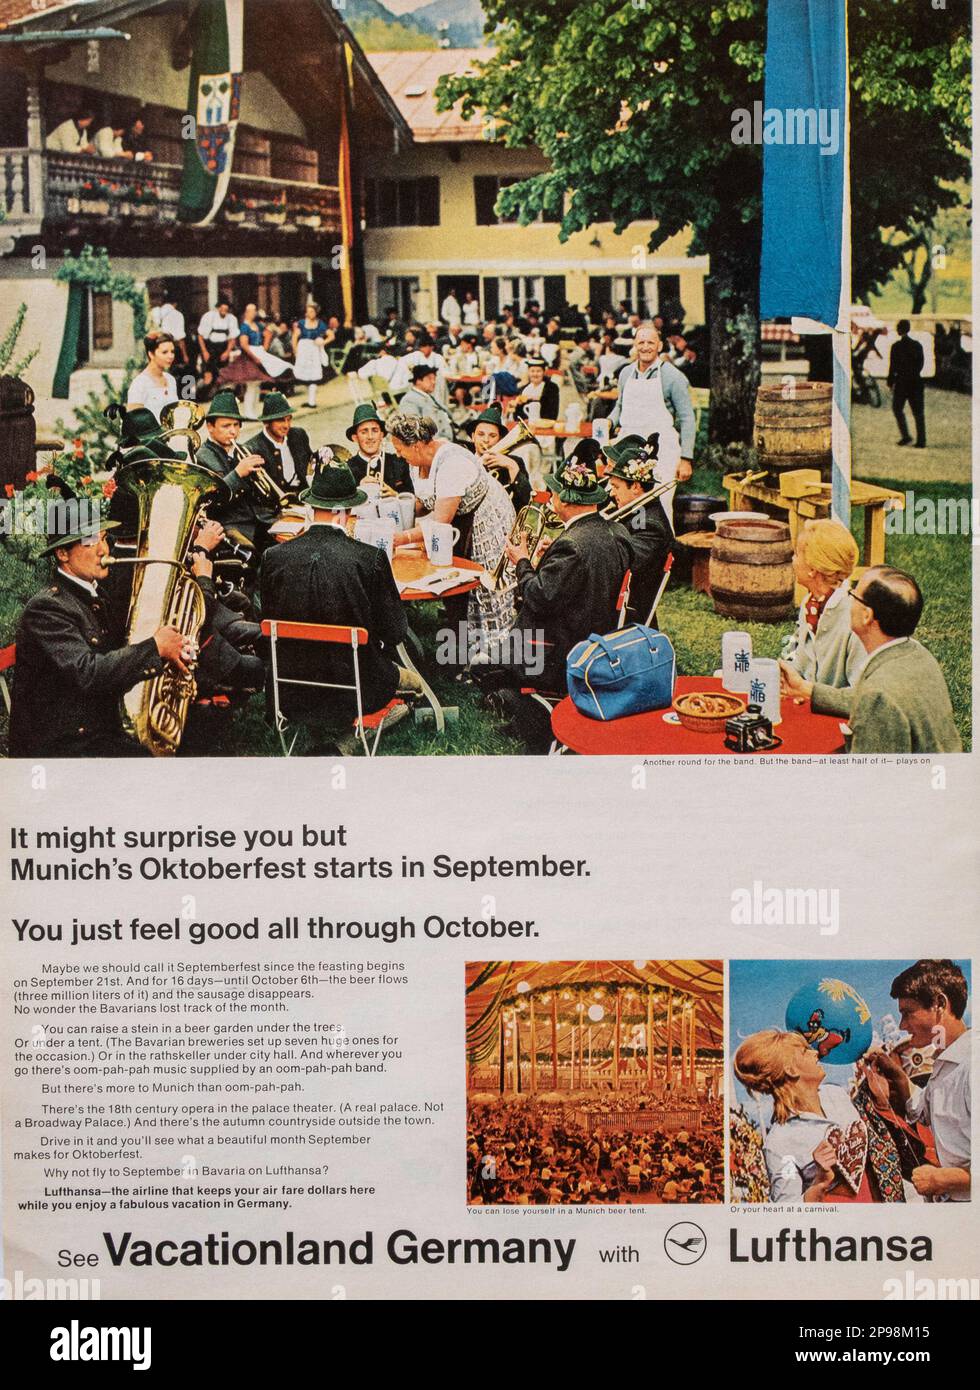 Vintage "Life" Magazine 14 June 1968 Issue Advert, USA Stock Photo